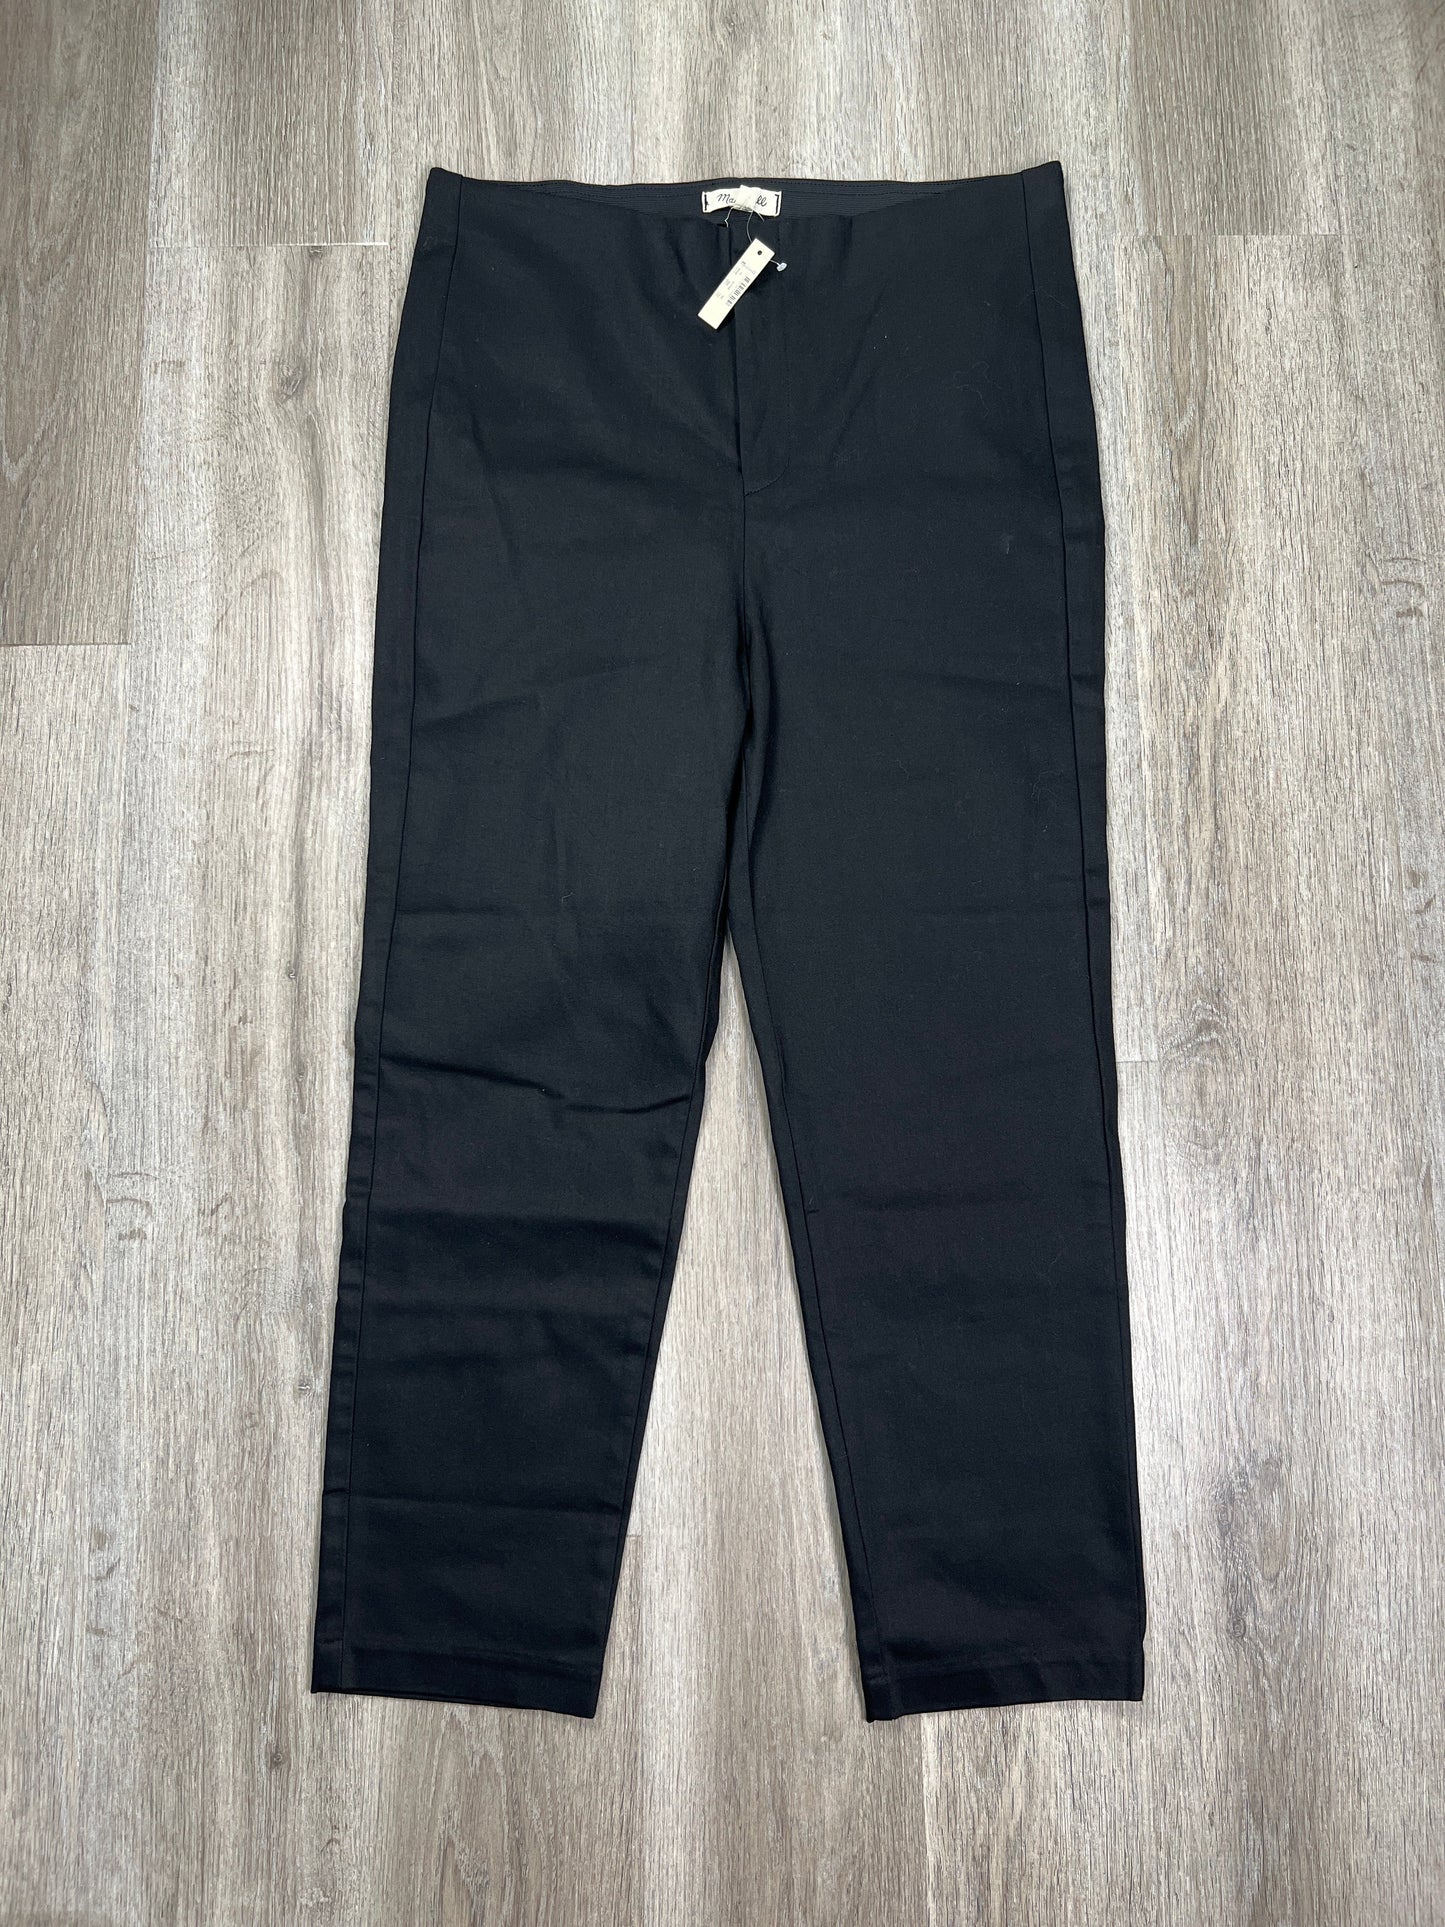 Black Pants Dress Madewell, Size L